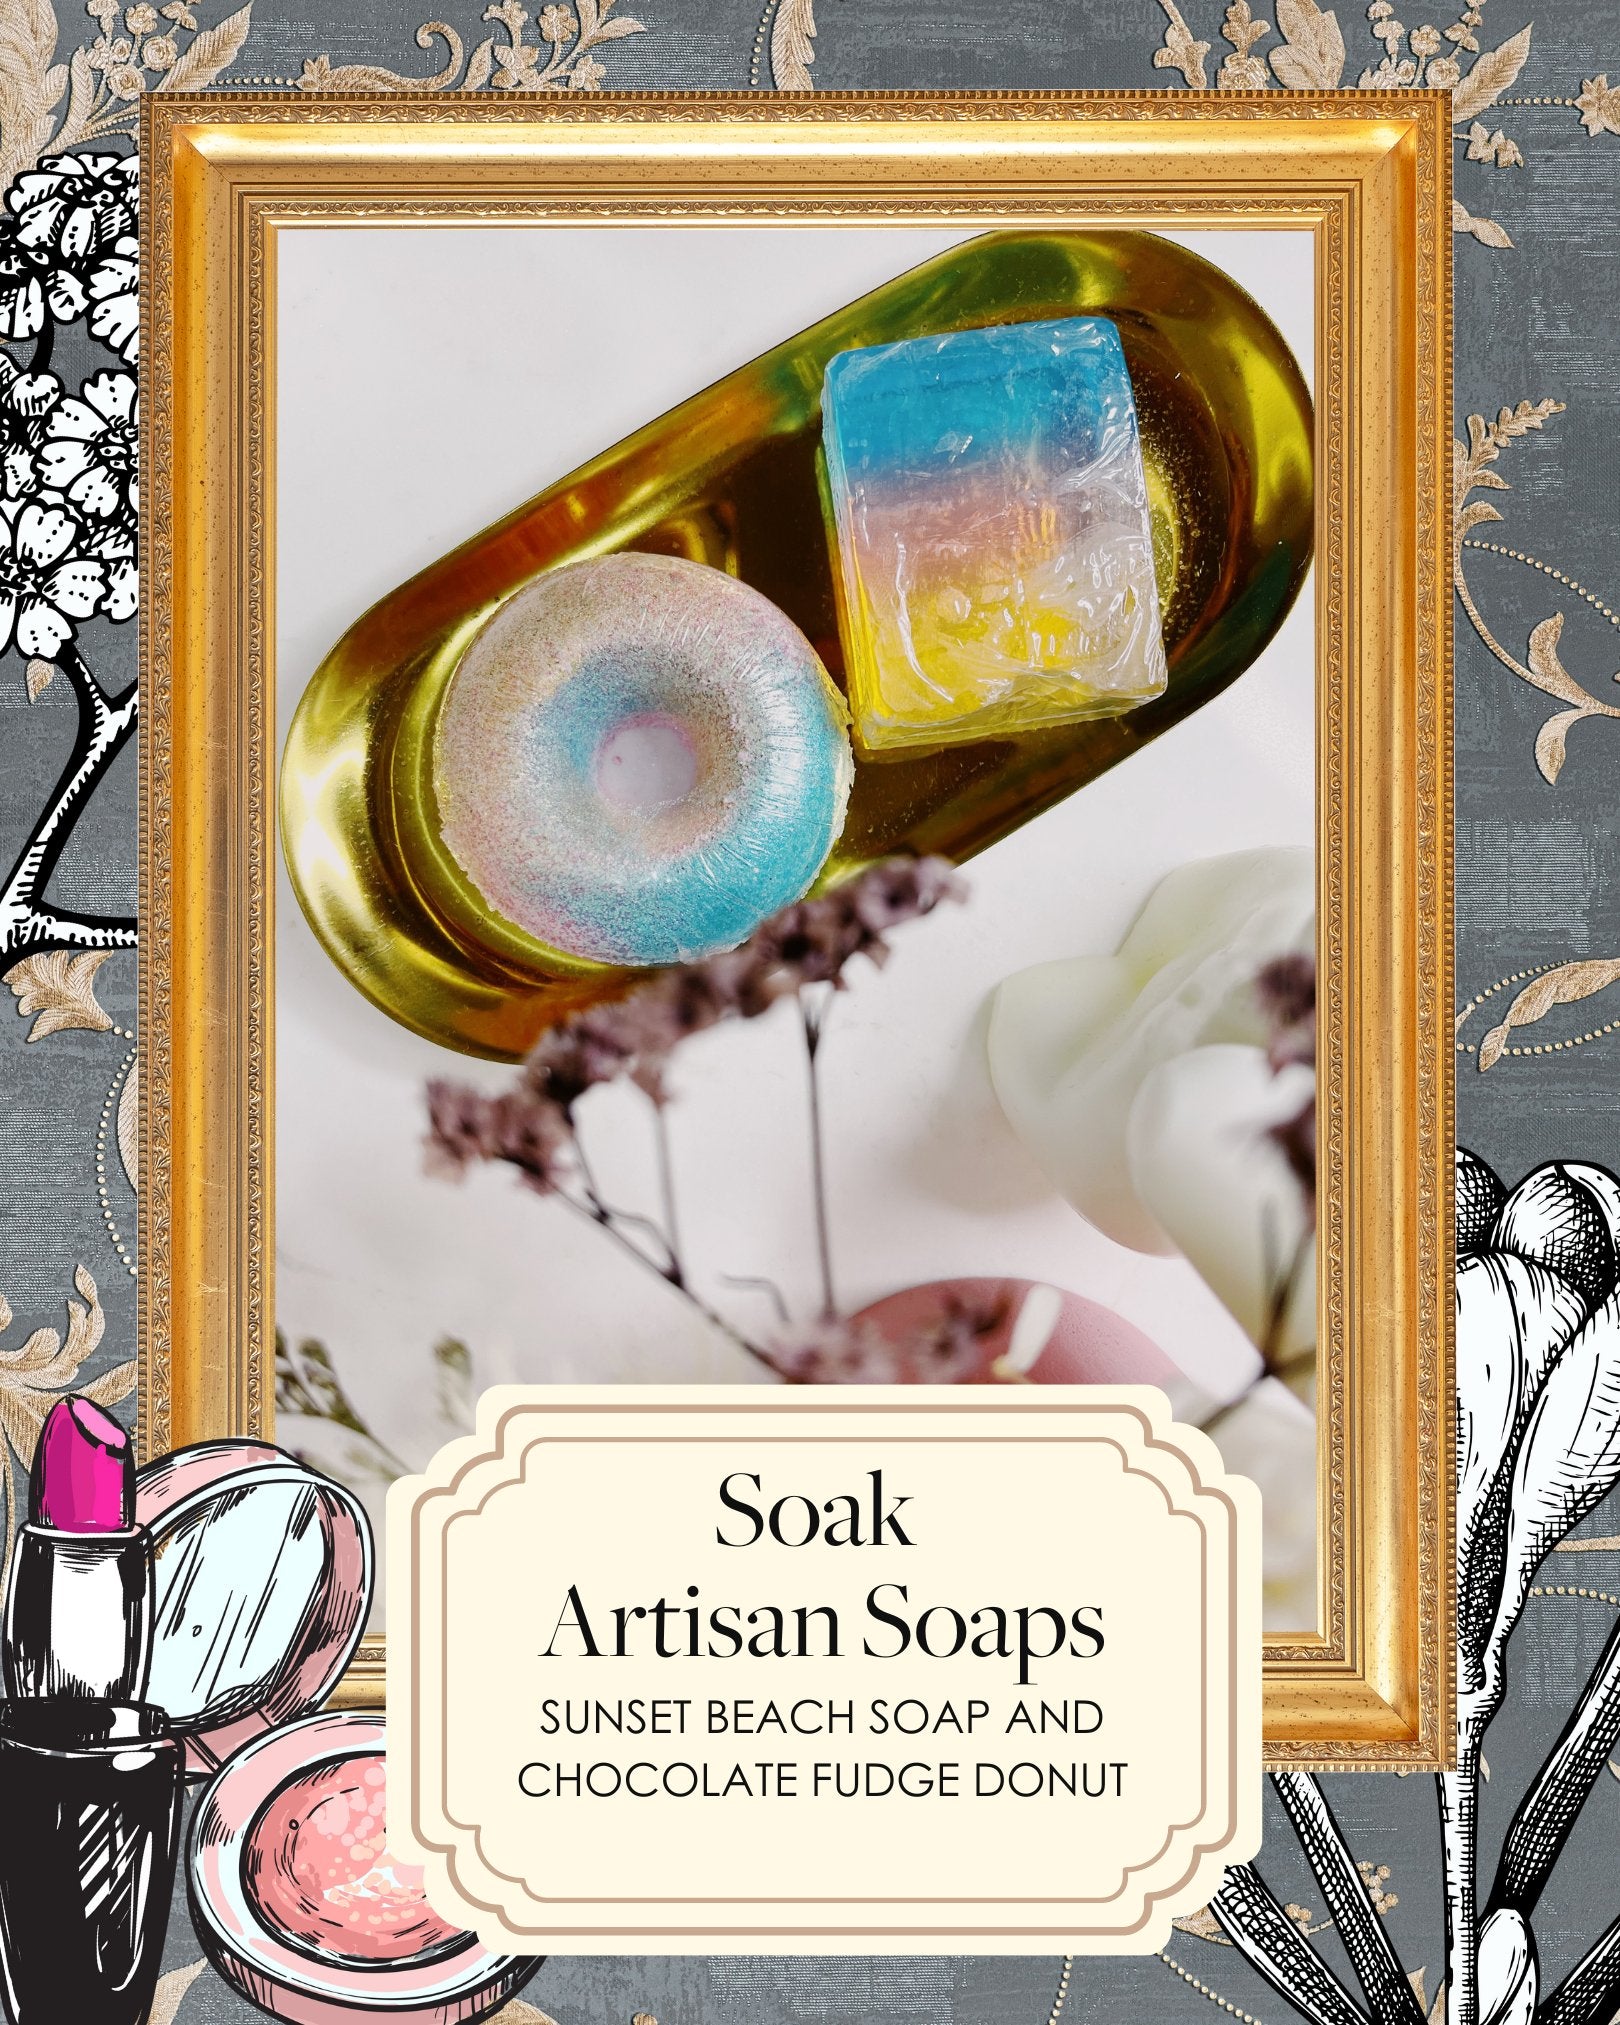 Inside The Box: Soak Artisan Soap